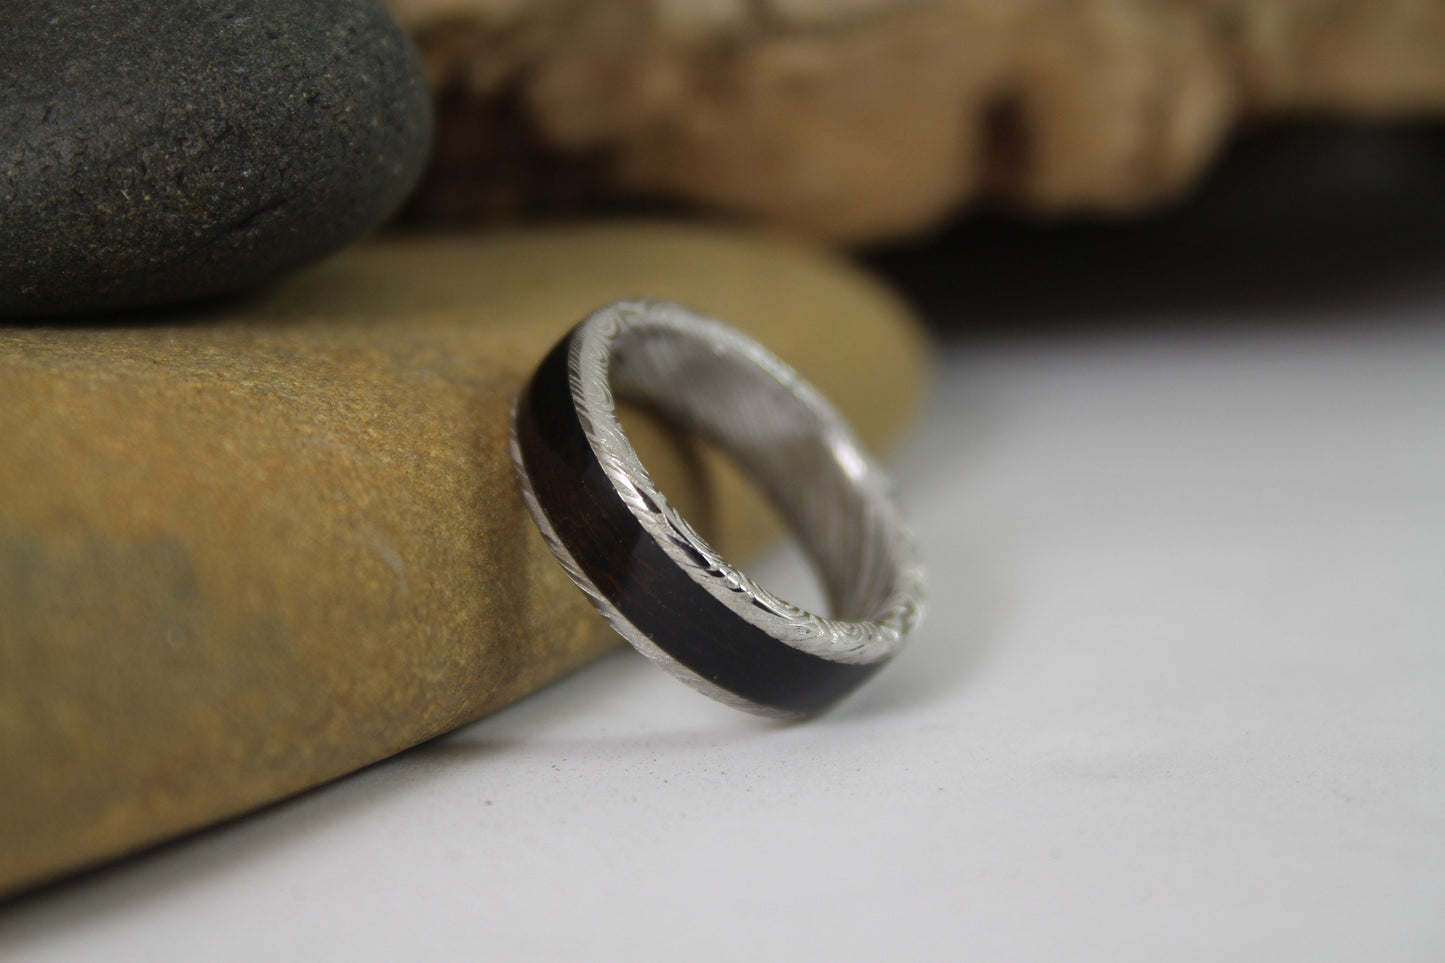 Damascus Steel Ring With Ebony Wood Inlay